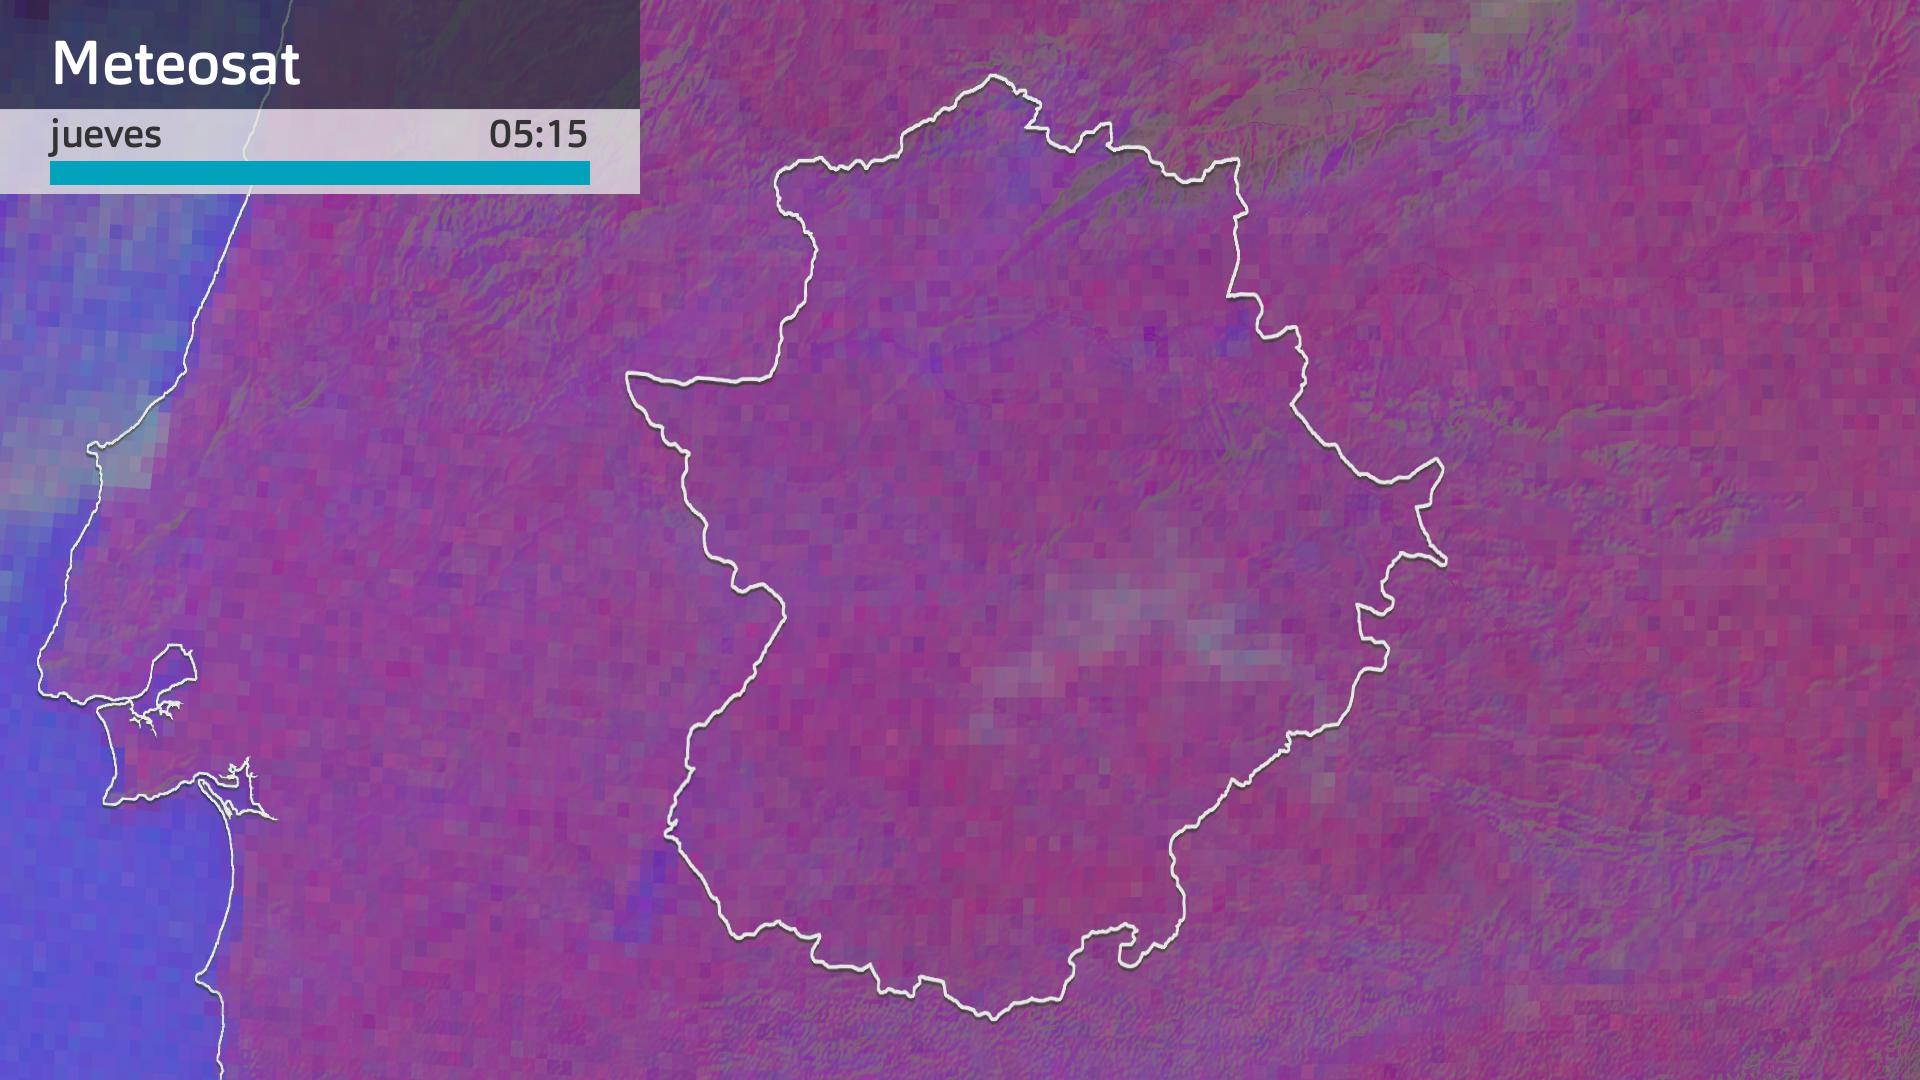 Imagen del Meteosat jueves 21 de diciembre 5:15 h.